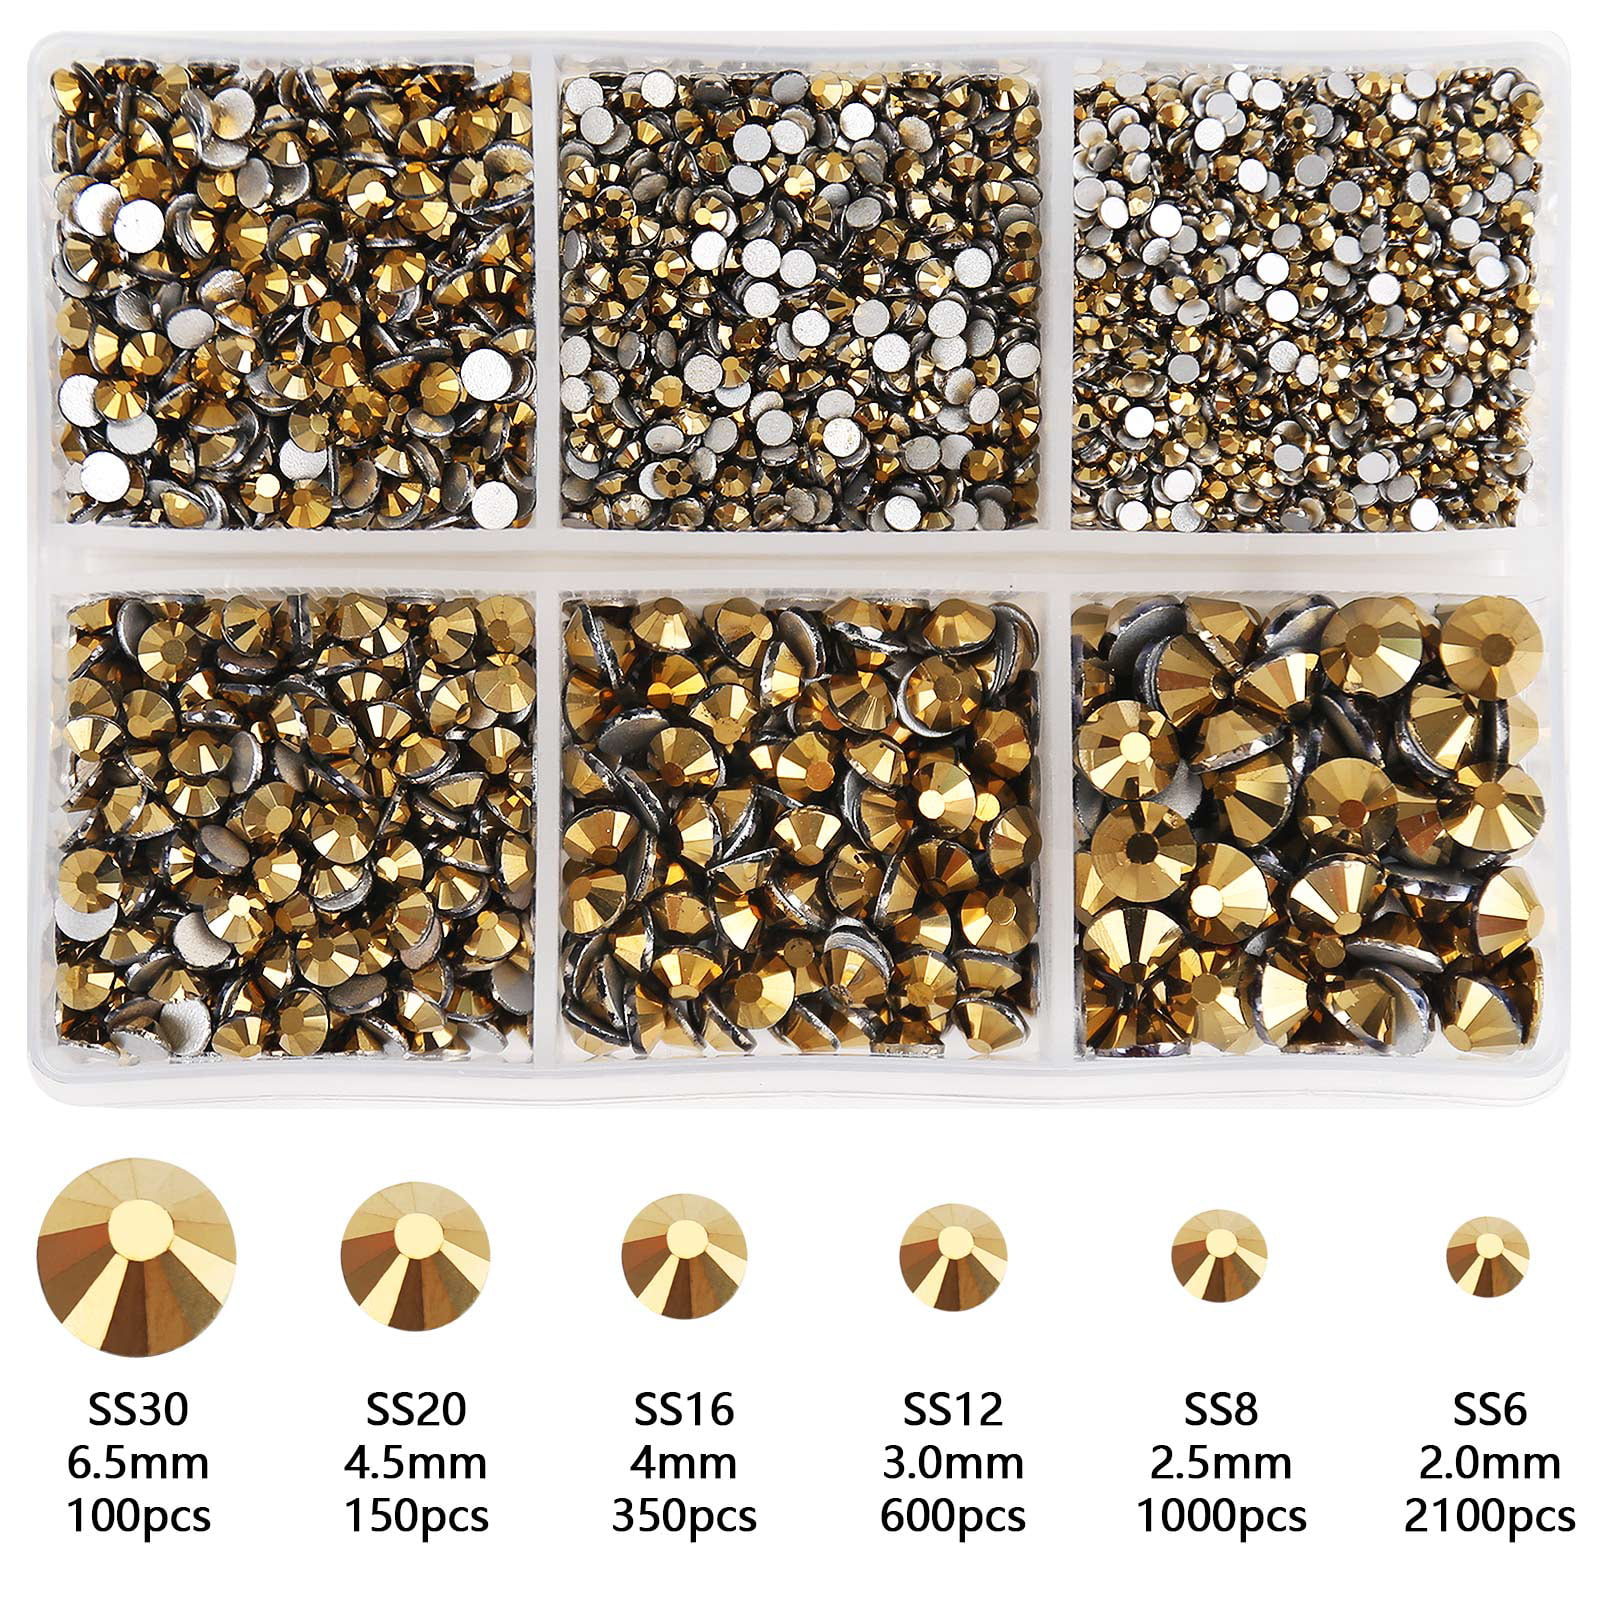 Gold RHINESTONES 2mm, 3mm, 4mm, 5mm, 6mm, flat back, ss6, ss10, ss16, ss20,  ss30, bulk, embellishments, faceted, #1216